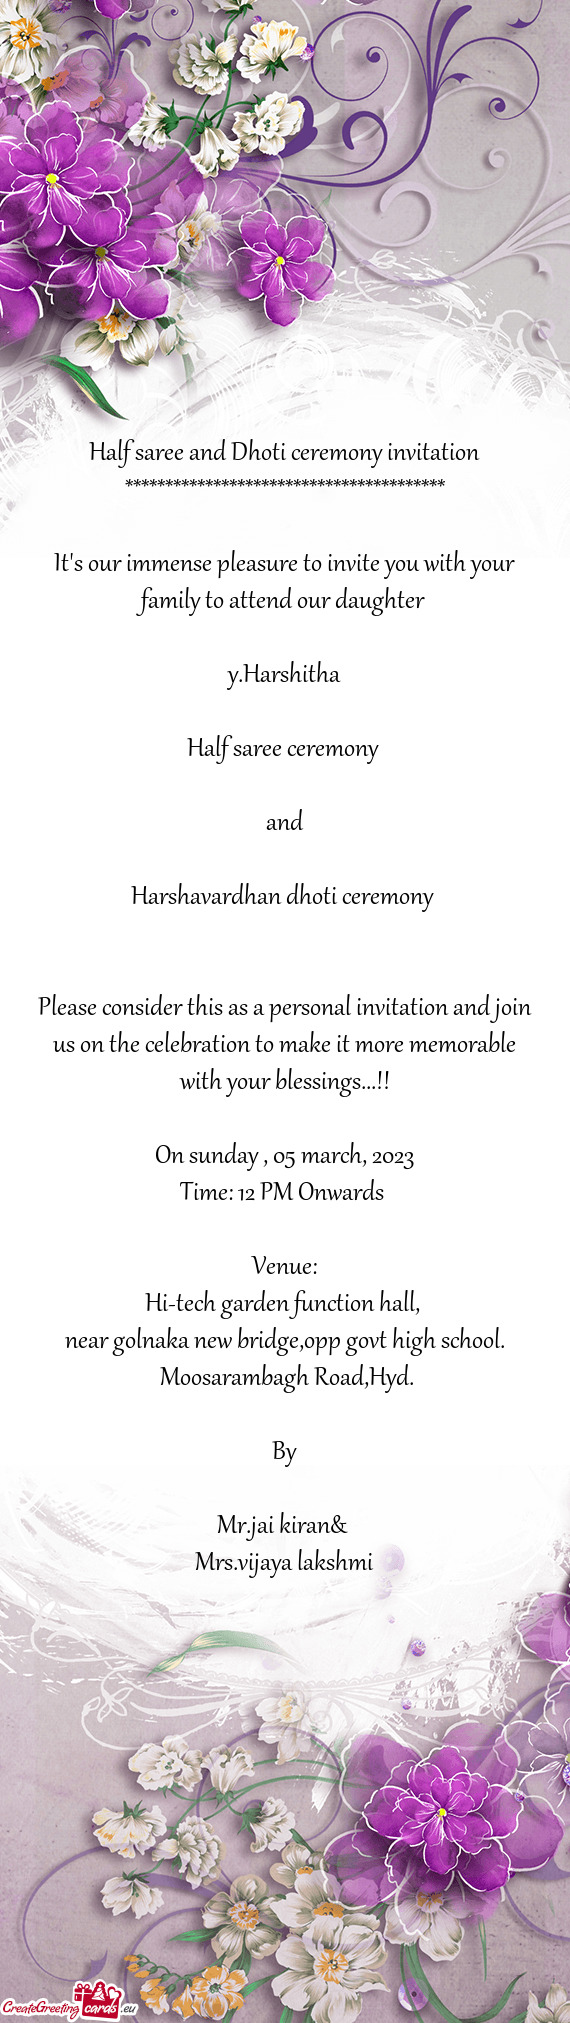 Harshavardhan dhoti ceremony